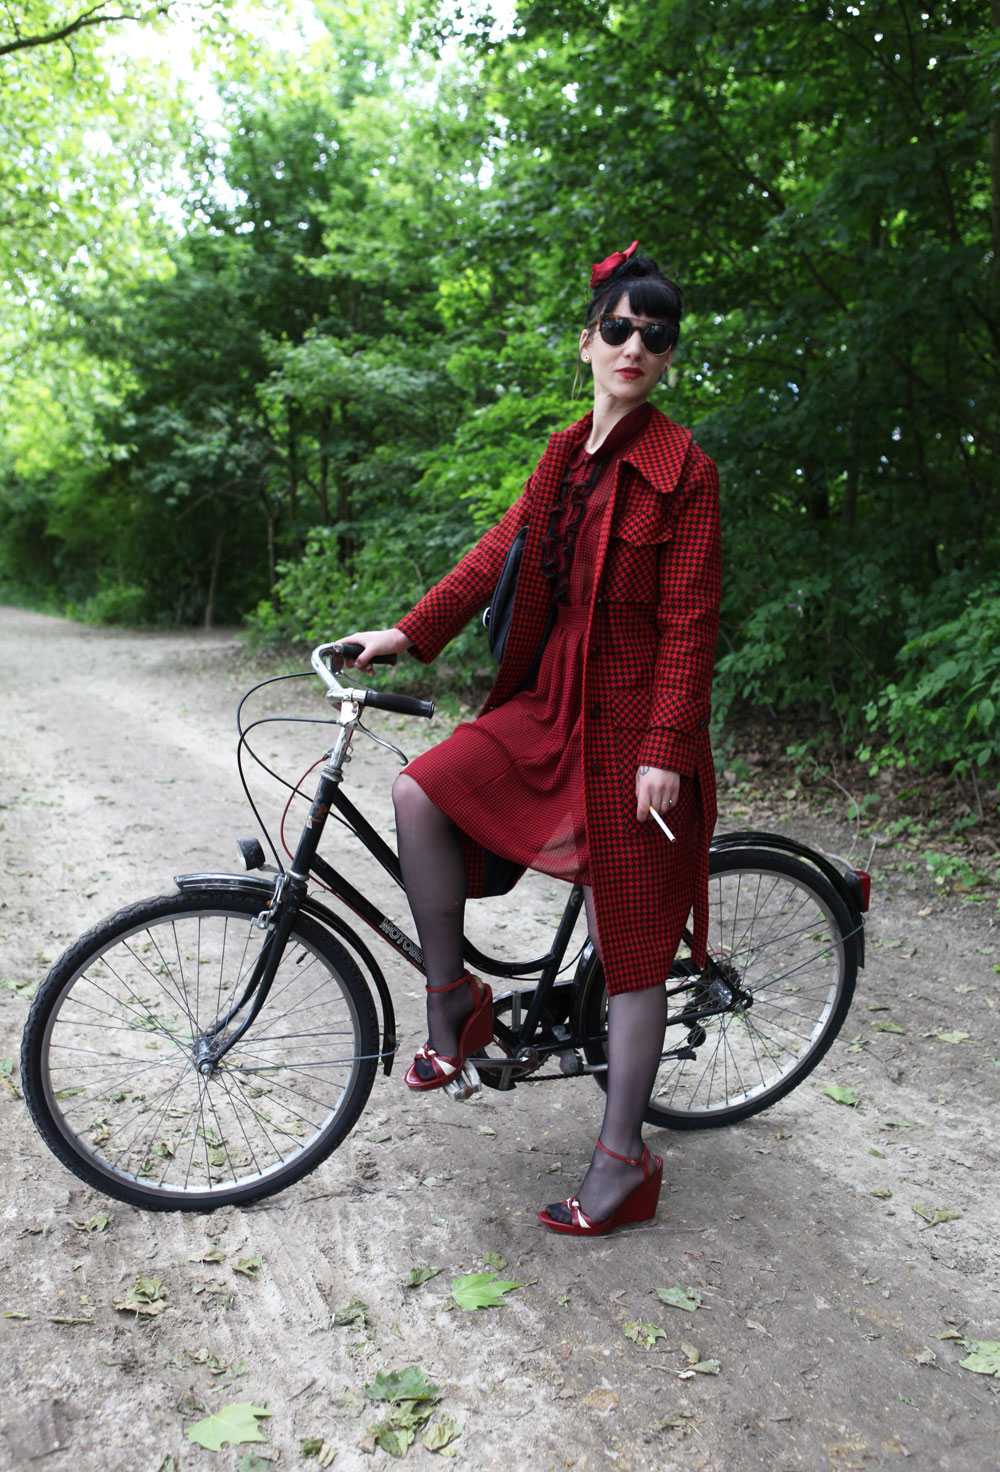 beret-baguette-paris-bike-pretty-street-style-bike-fashion-photo-Kelly-Miller-16